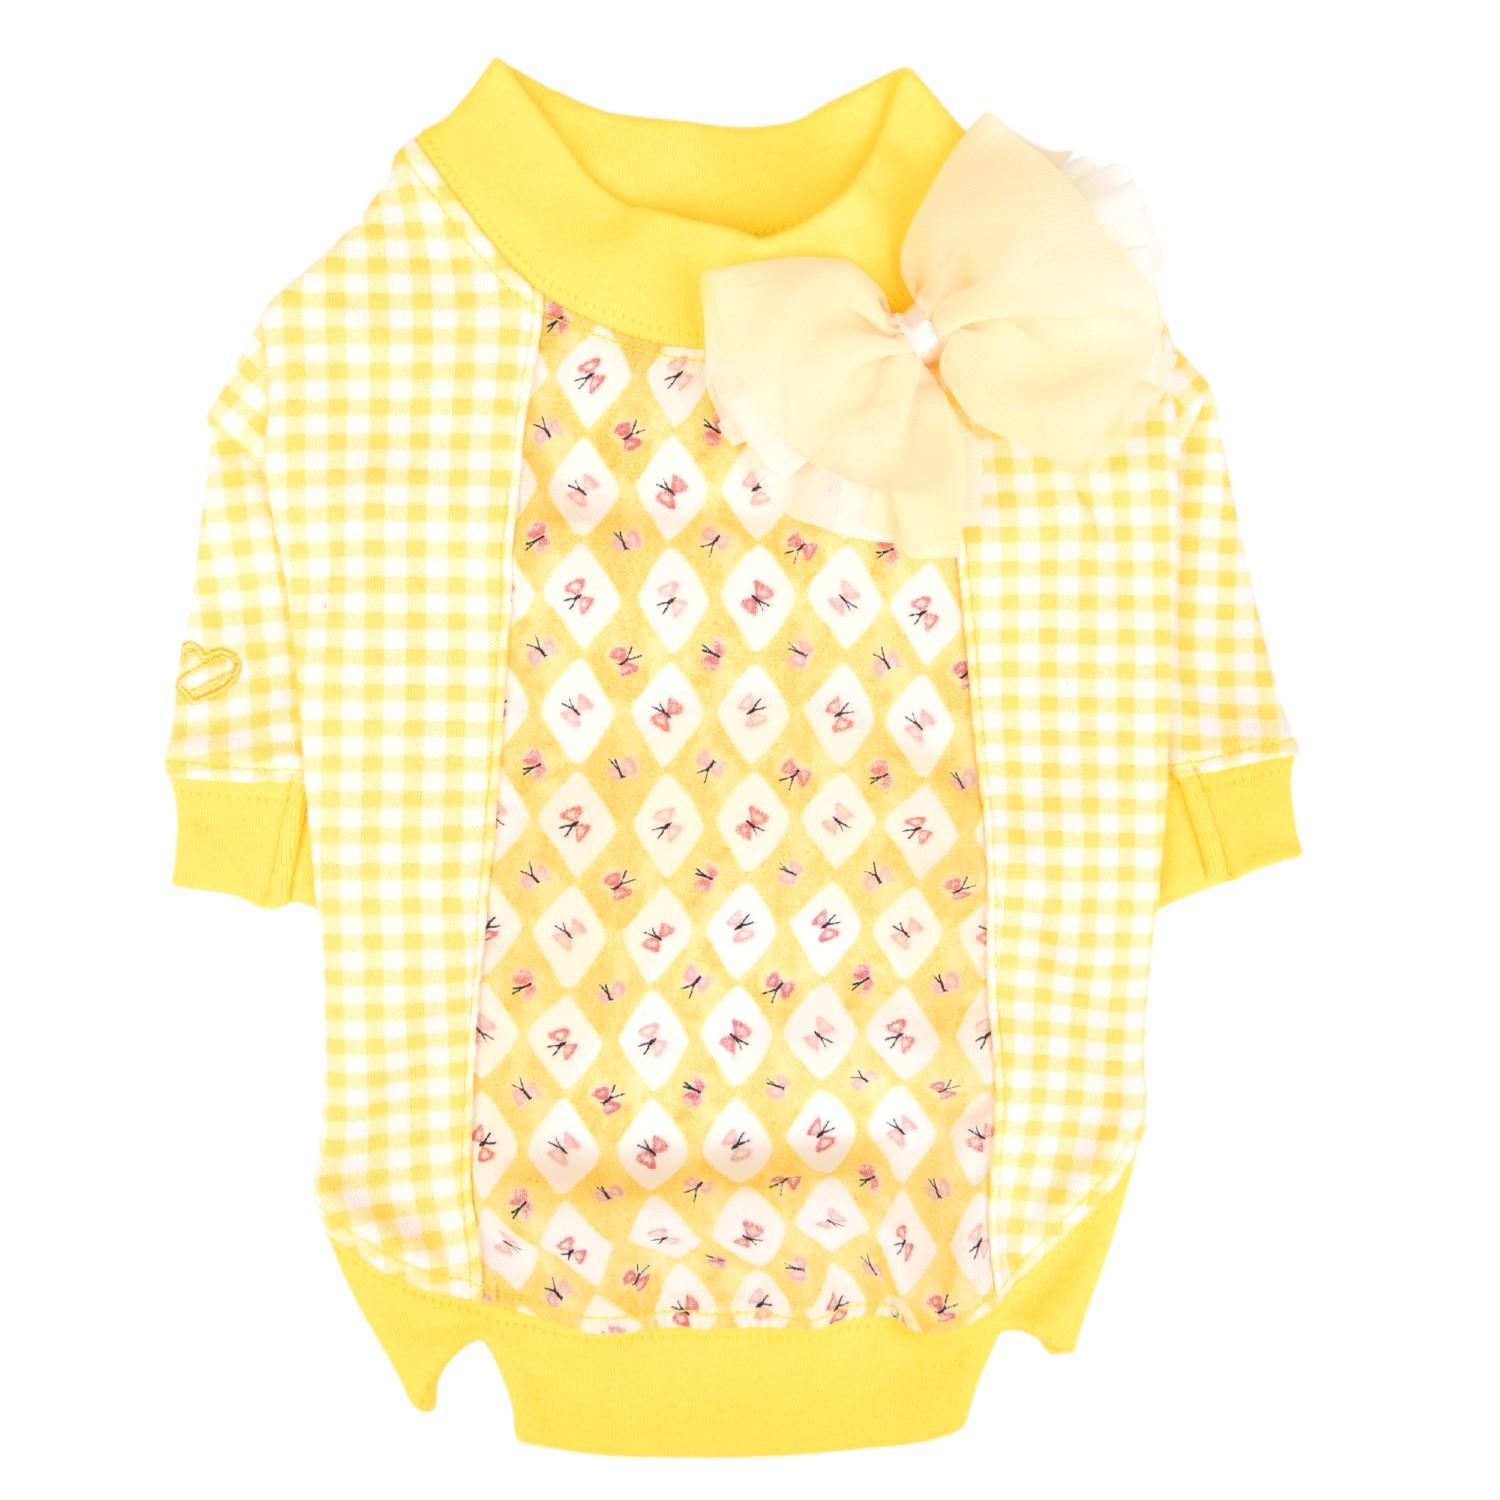 Alaia Dog Shirt by Pinkaholic - Yellow